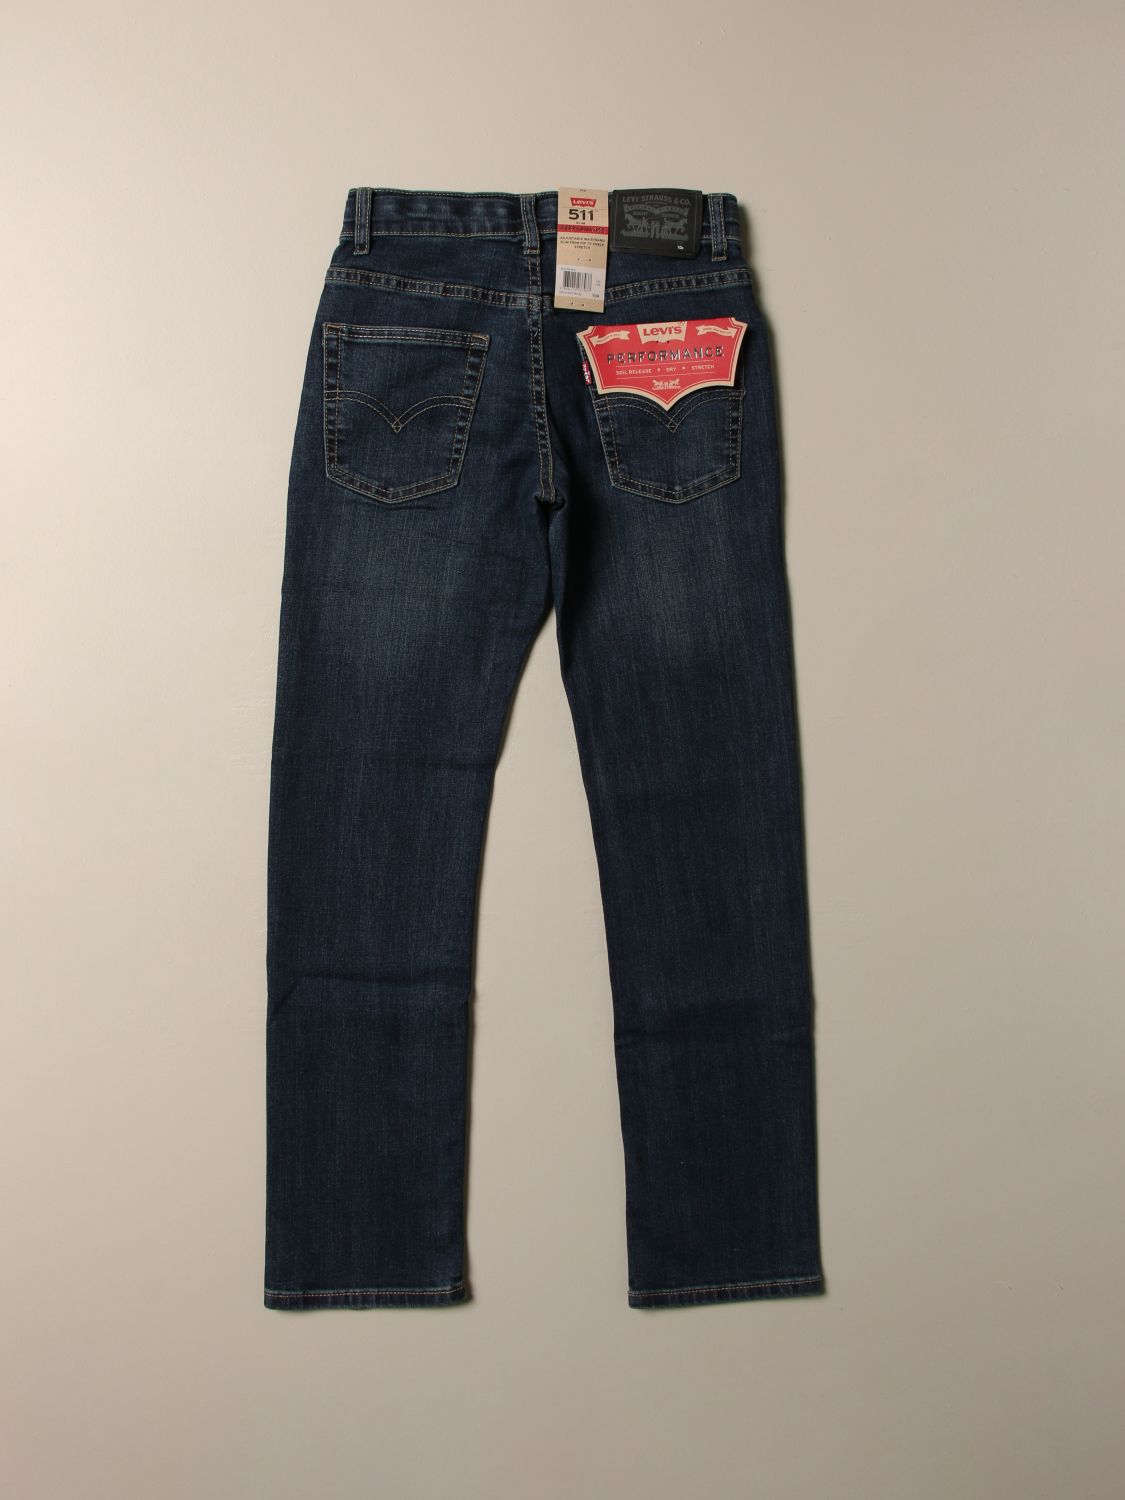 levi strauss jeans 511